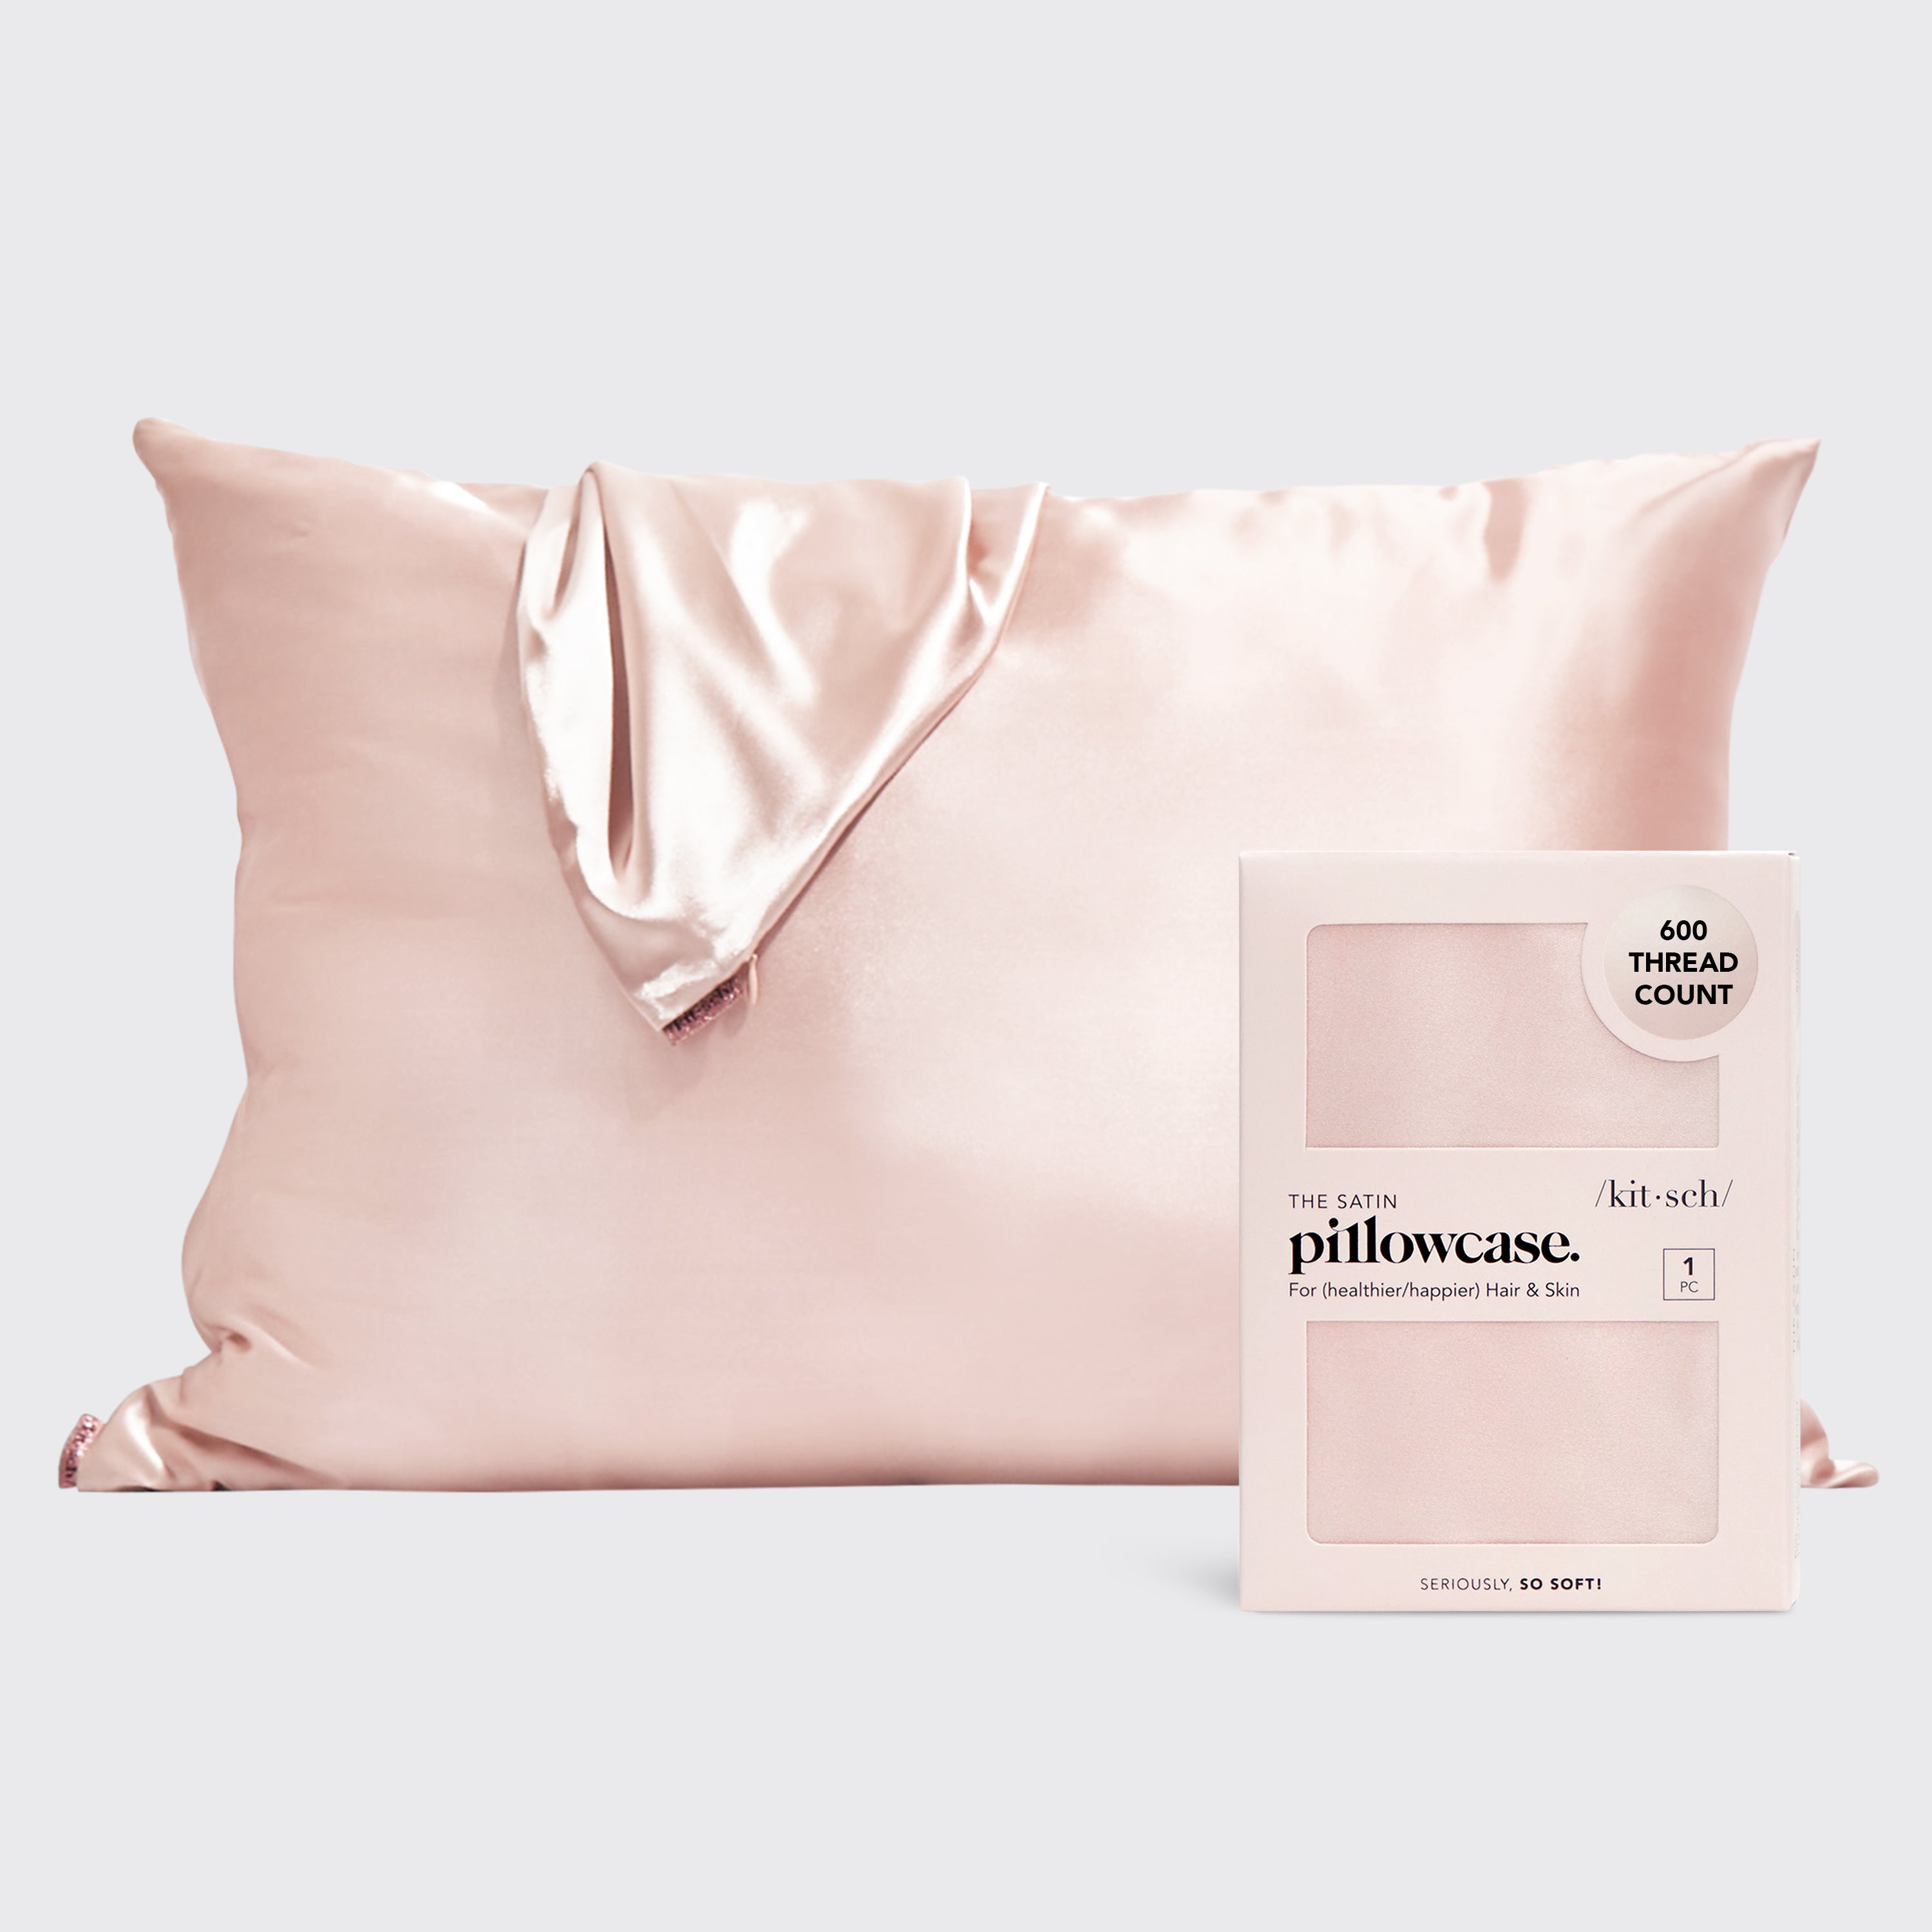 Fresh Face Pillow - Silk Pillowcase - Posture Correction Pillow